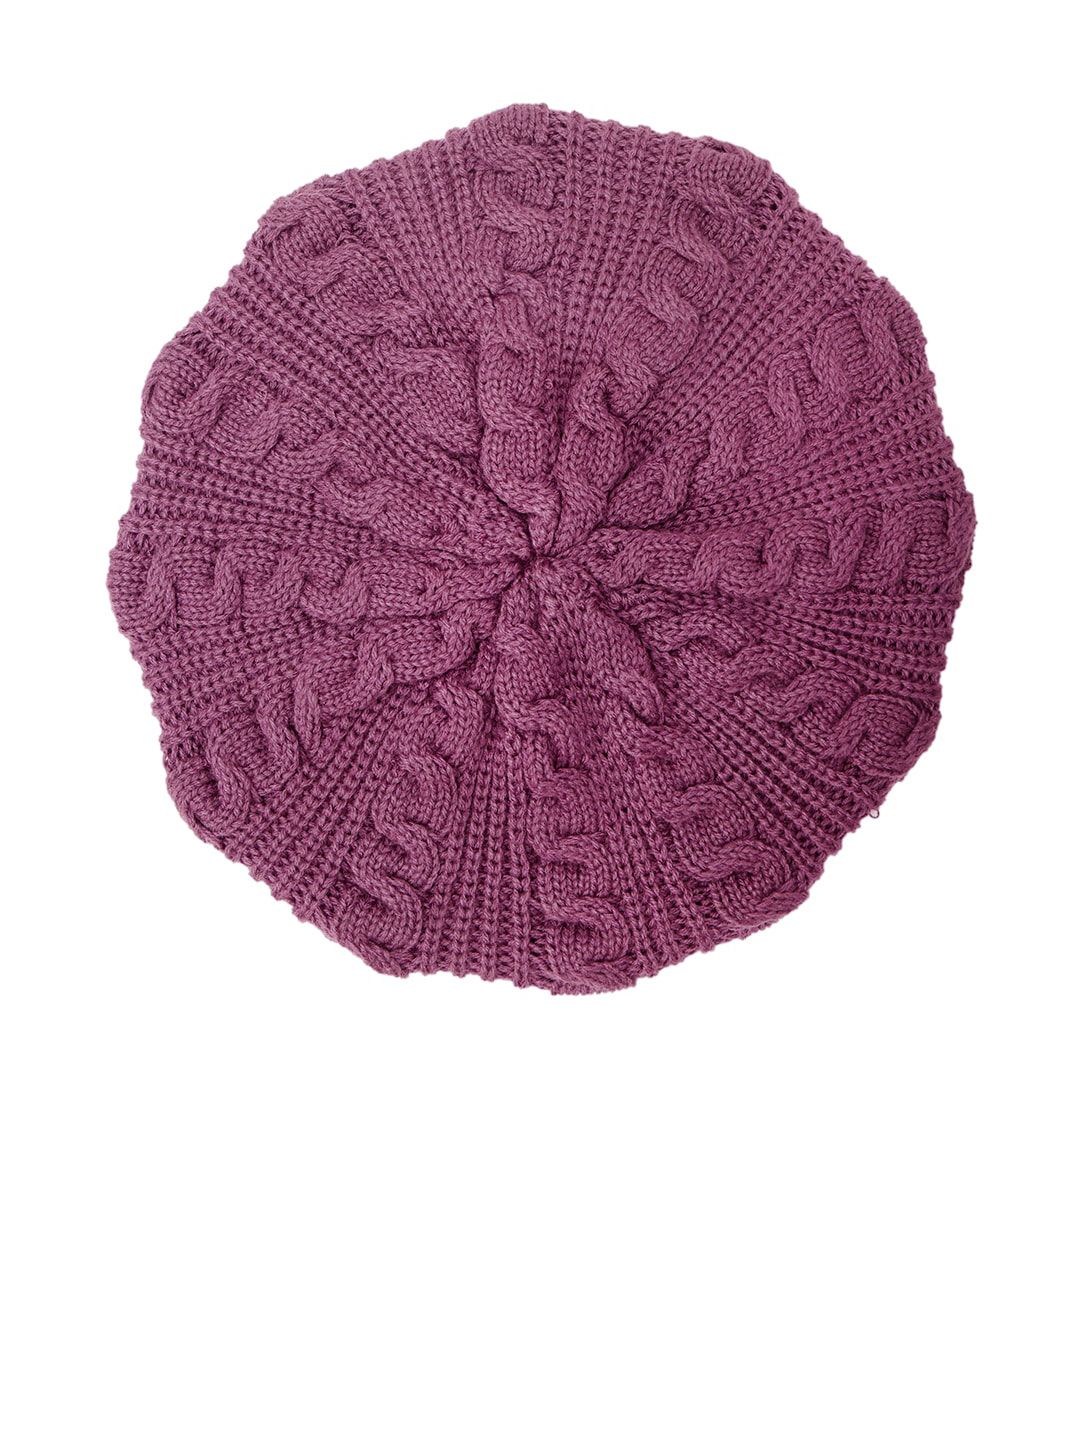 Bharatasya Women Purple Caps Price in India